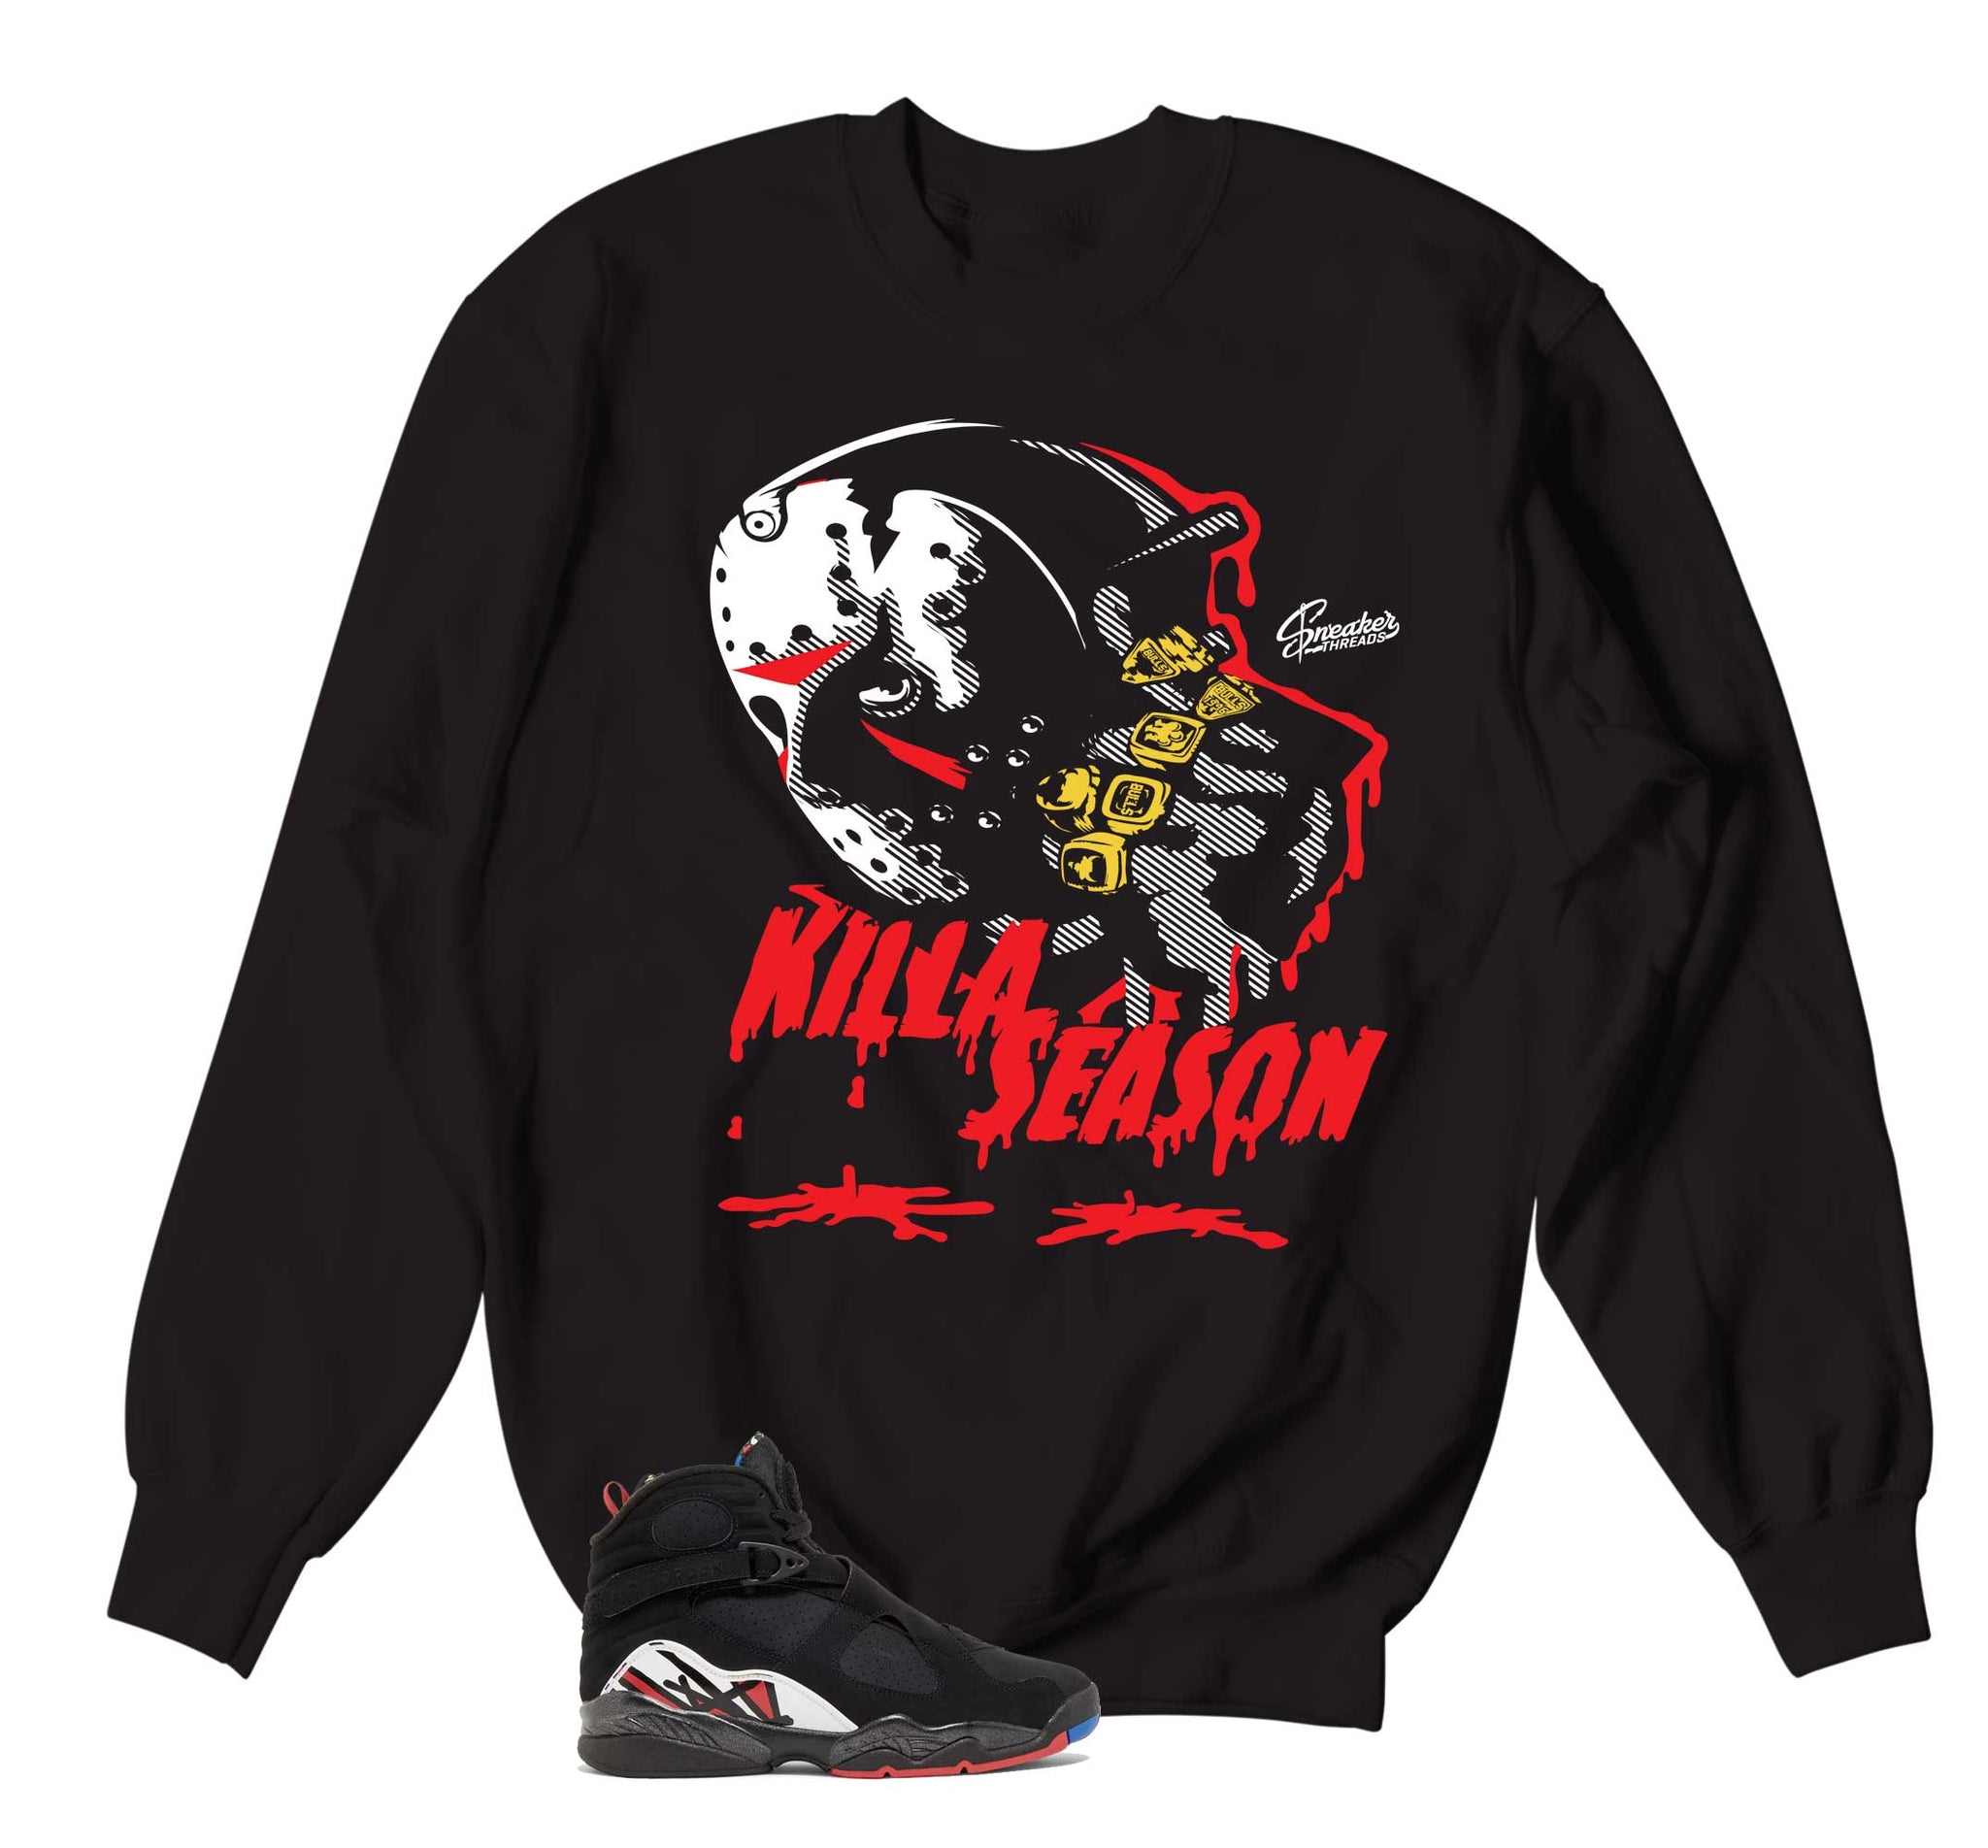 Retro 8 Playoffs Sweater - Killa Season - Black